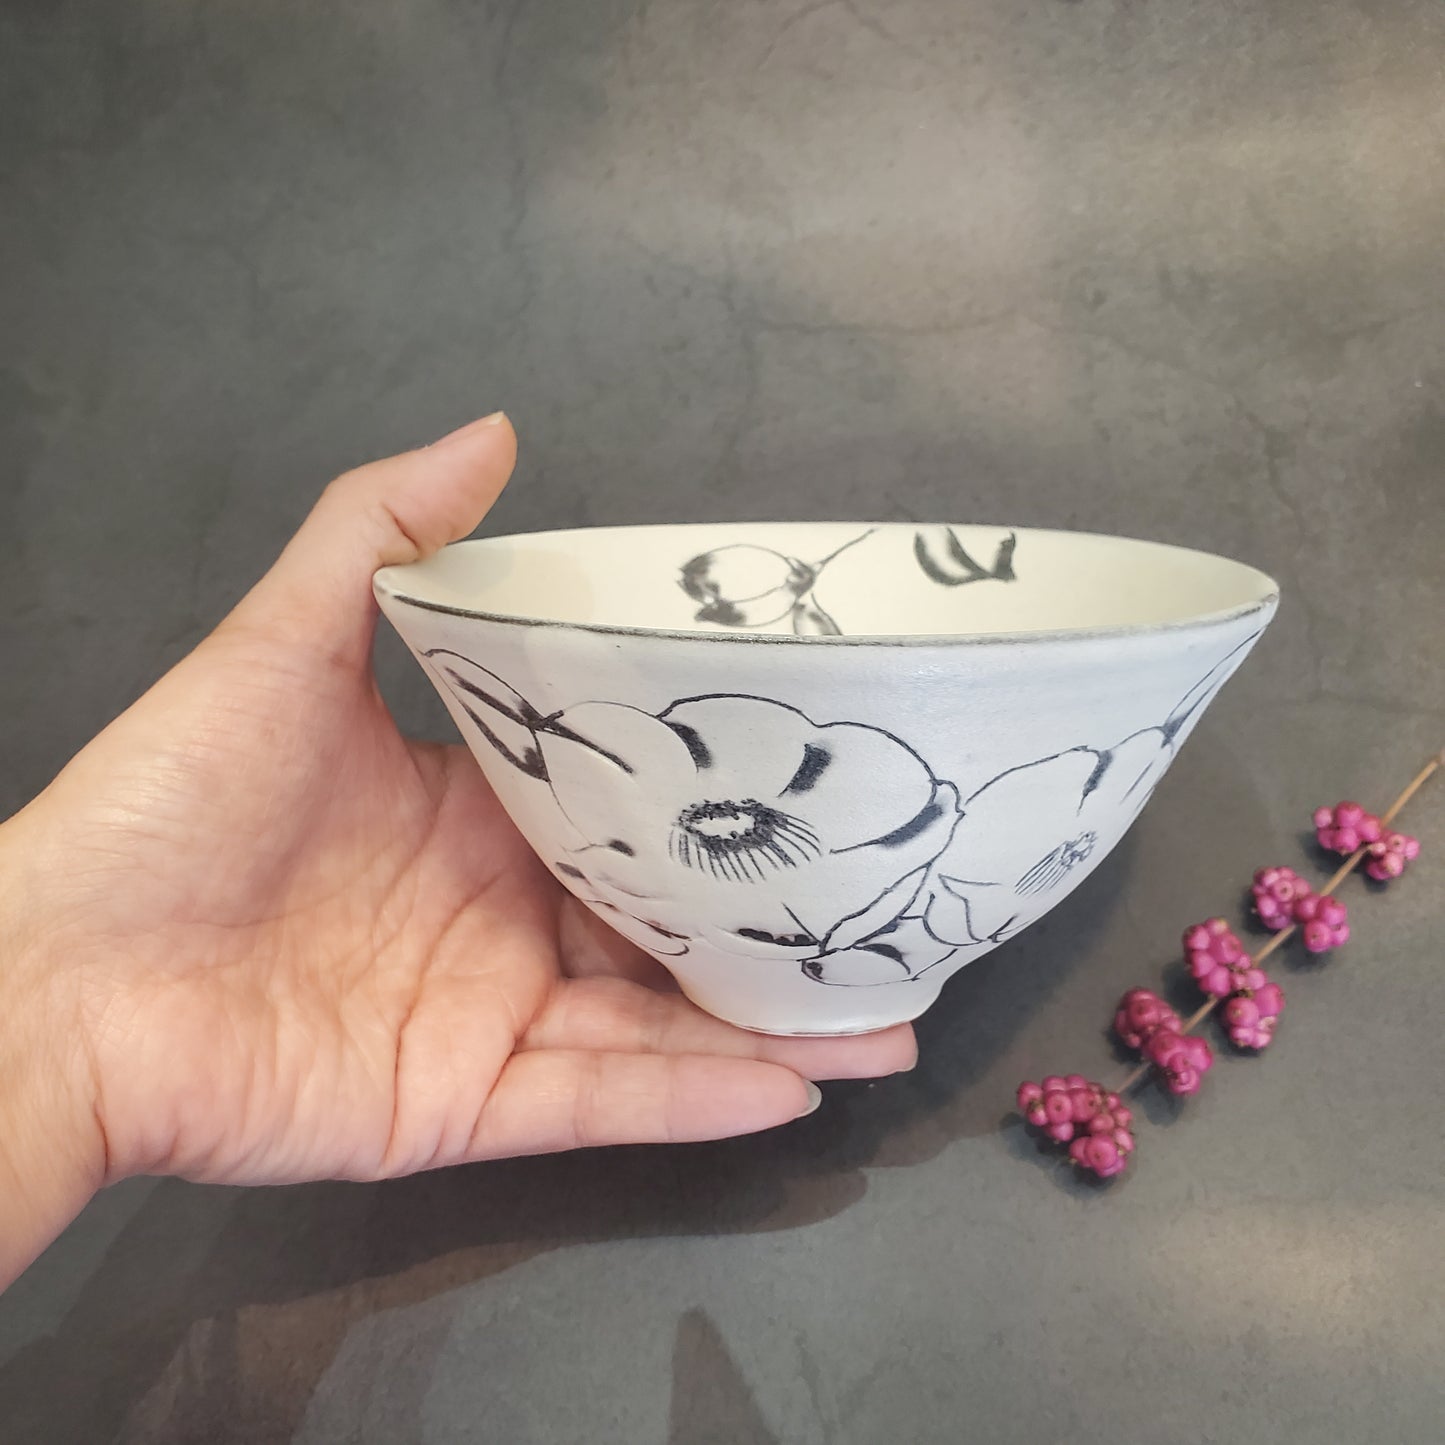 Scraping bowl "Tsubaki"